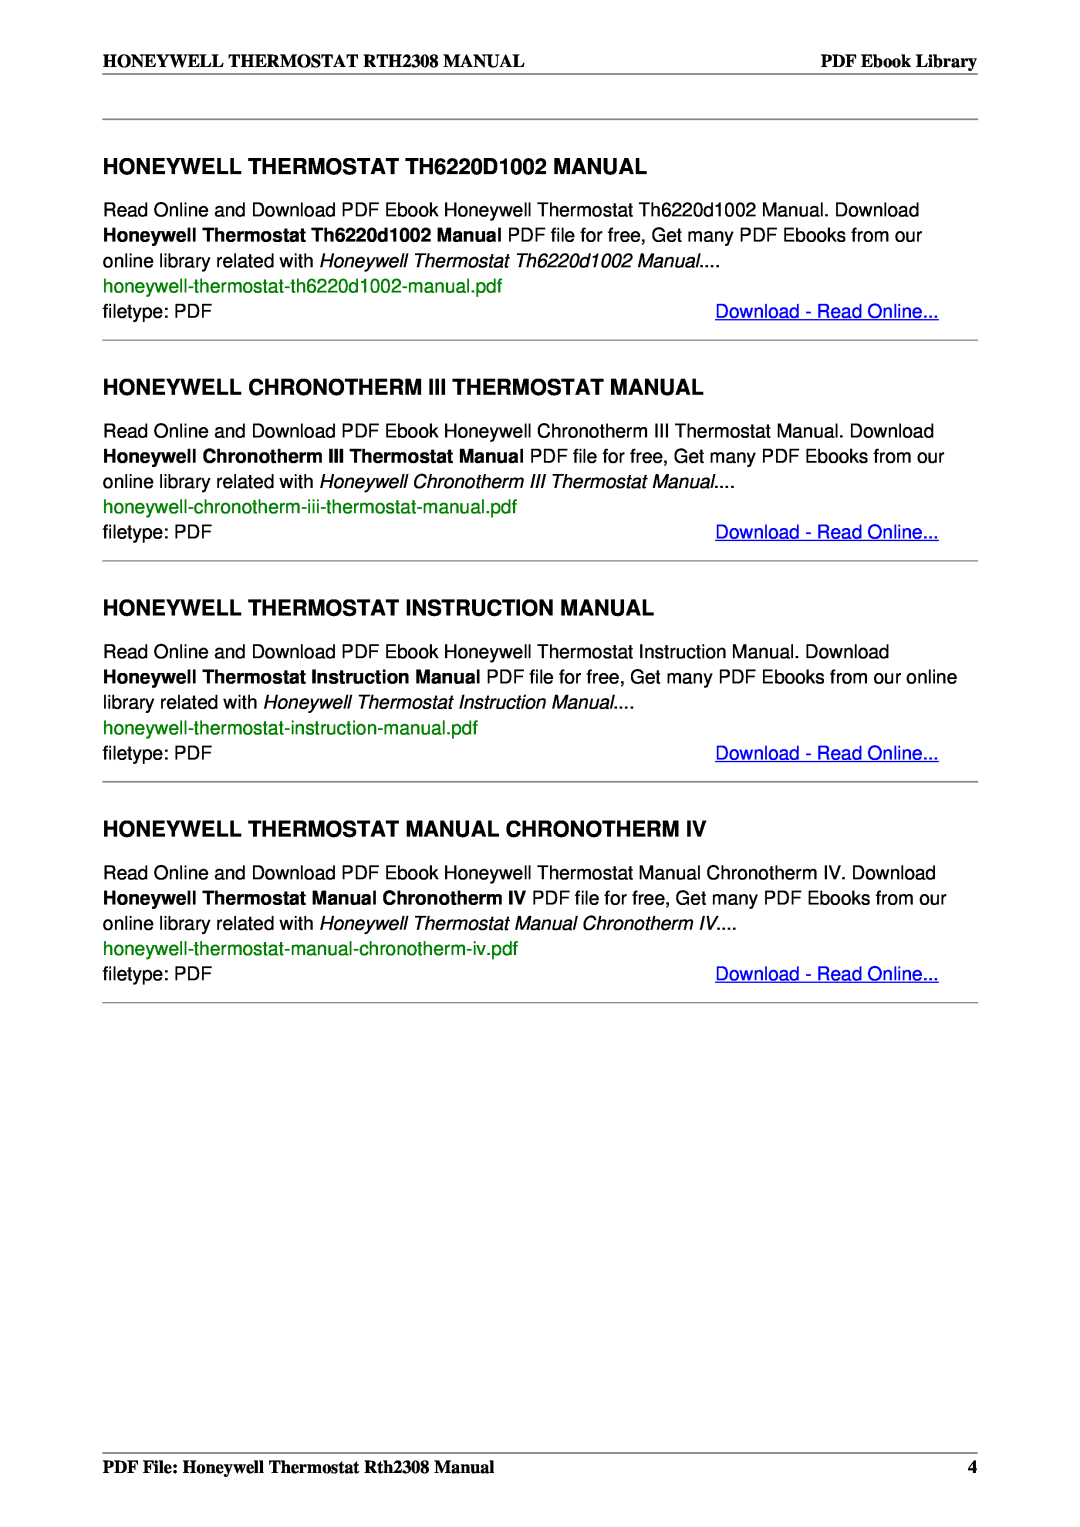 Honeywell RTH2308 manual HONEYWELL THERMOSTAT TH6220D1002 MANUAL, Honeywell Chronotherm Iii Thermostat Manual, filetype PDF 